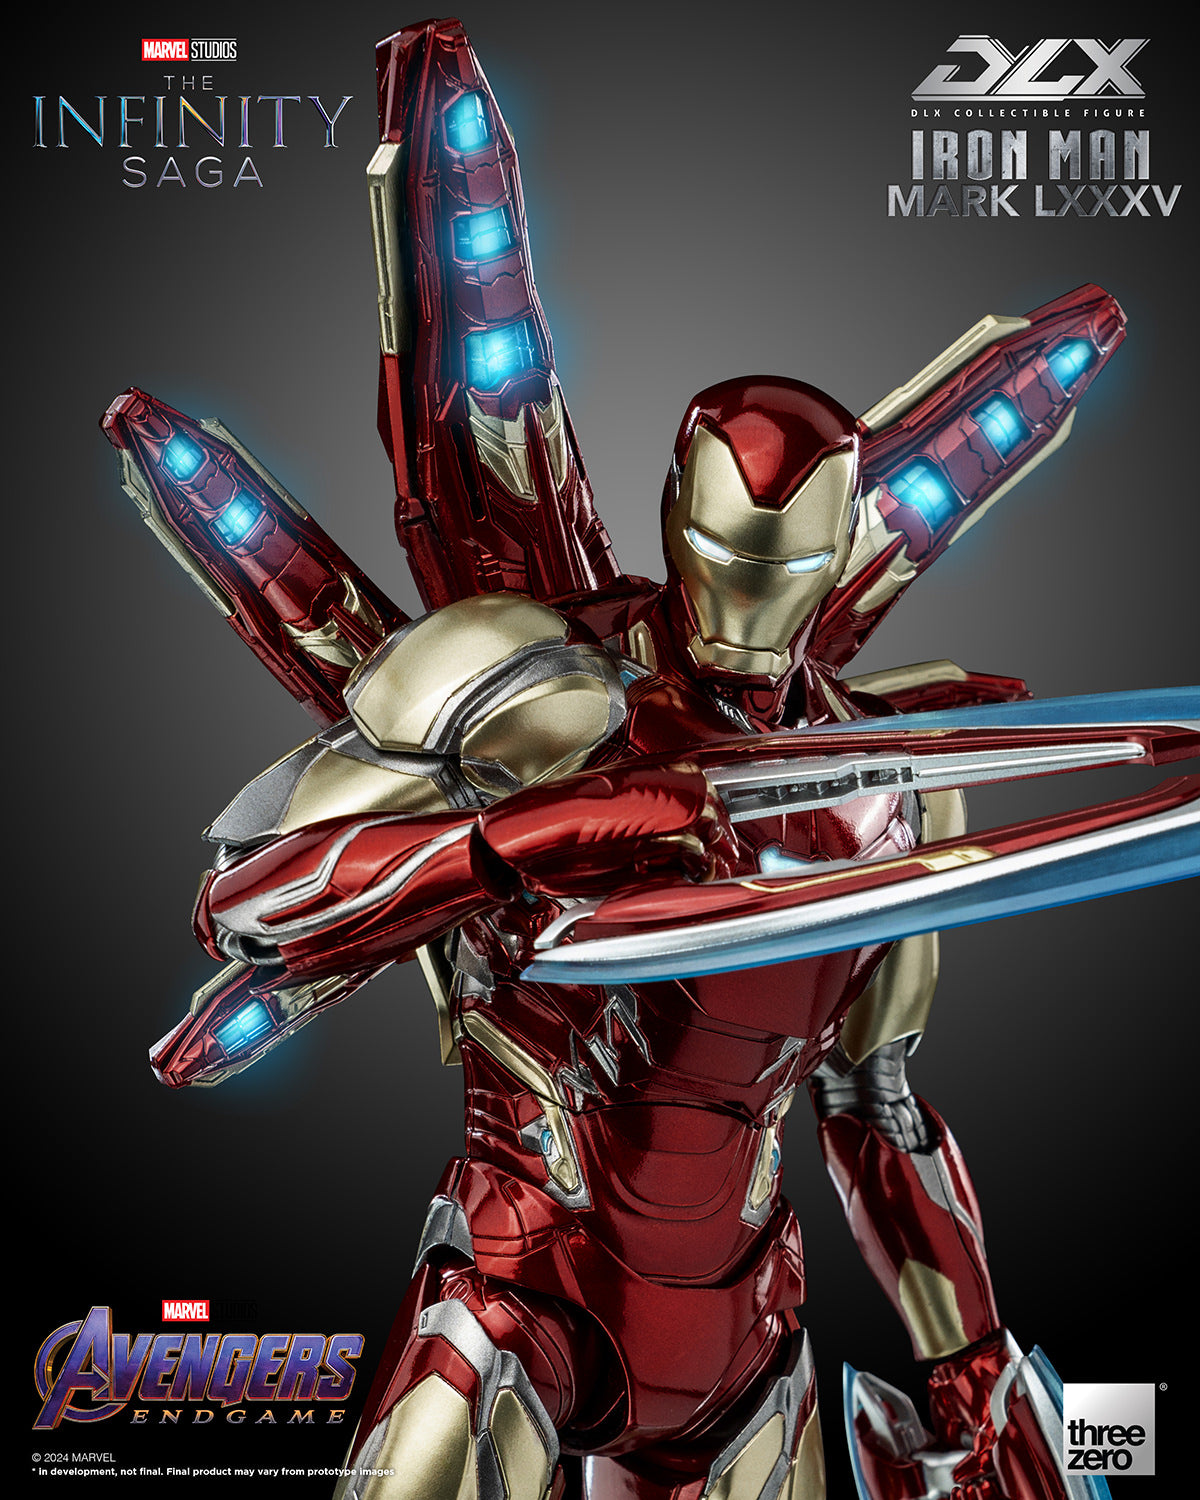 DLX Iron Man Mark 85 Collectible Figure